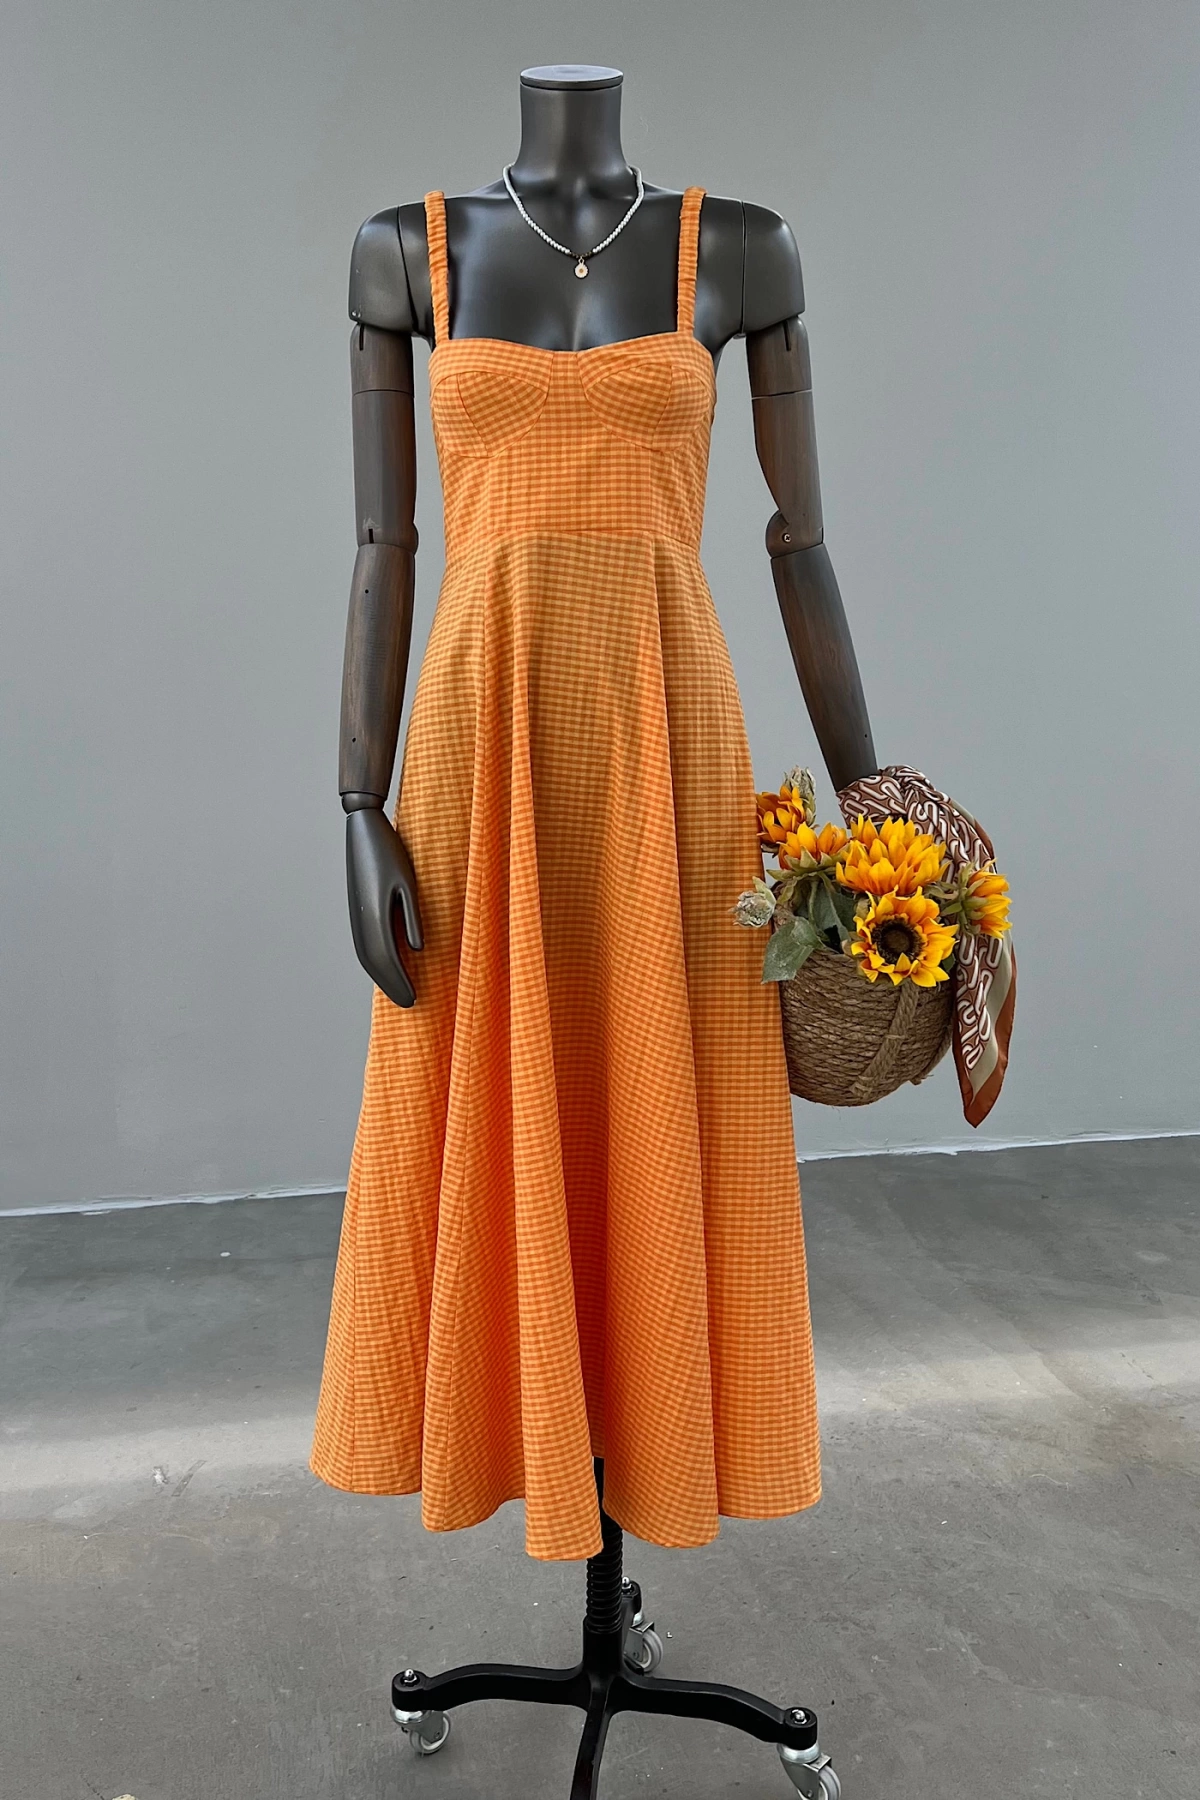 Square Patterned Orange Dress